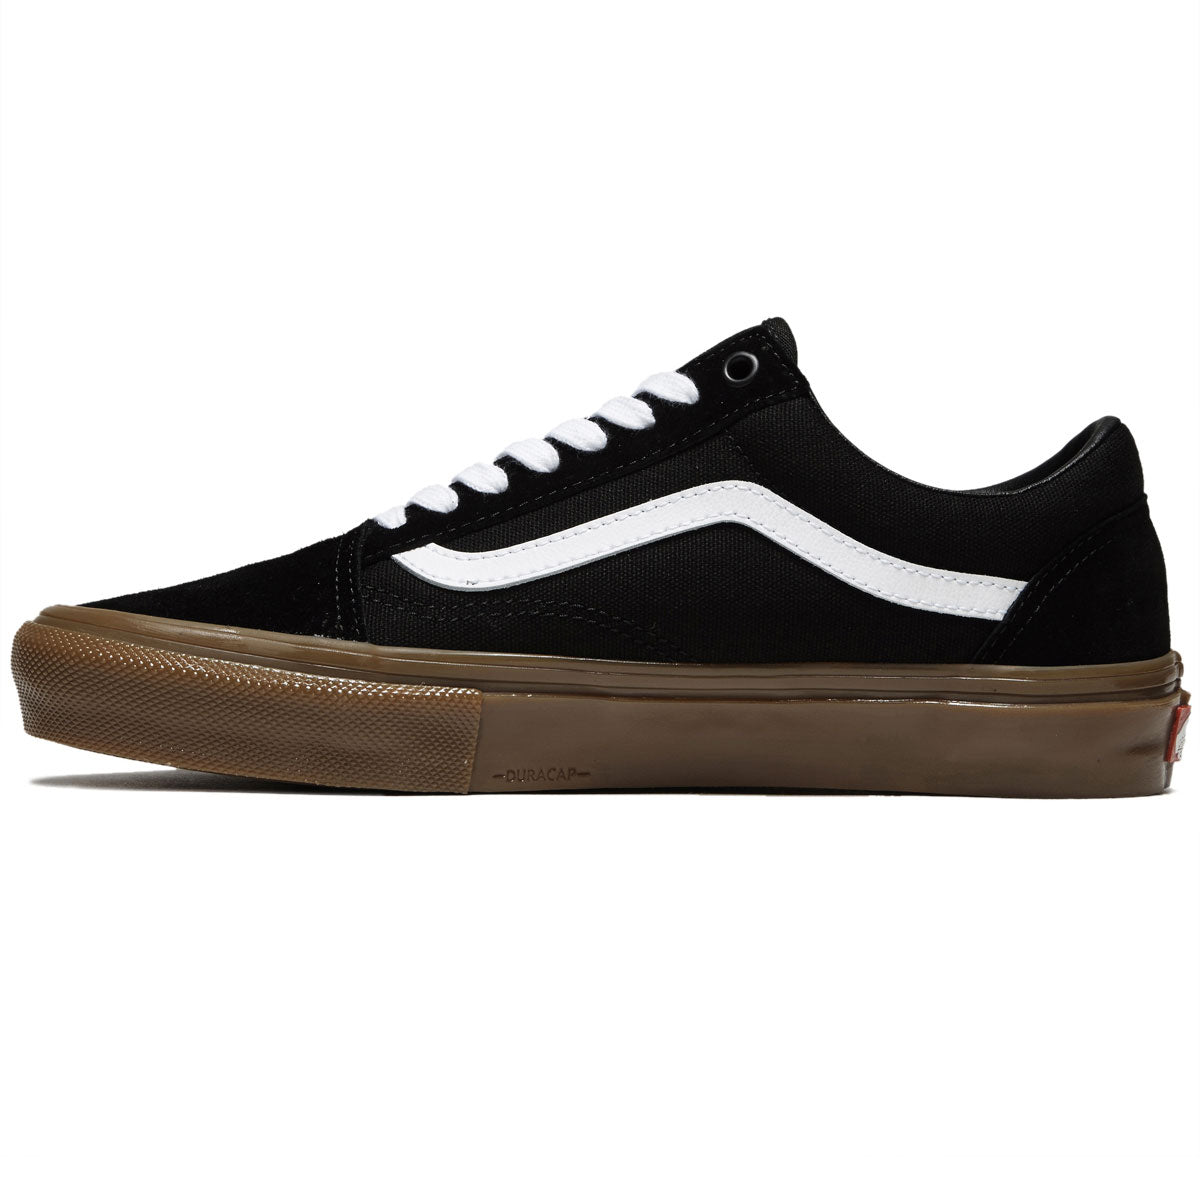 Vans Skate Old Skool Shoes - Black/Gum image 2